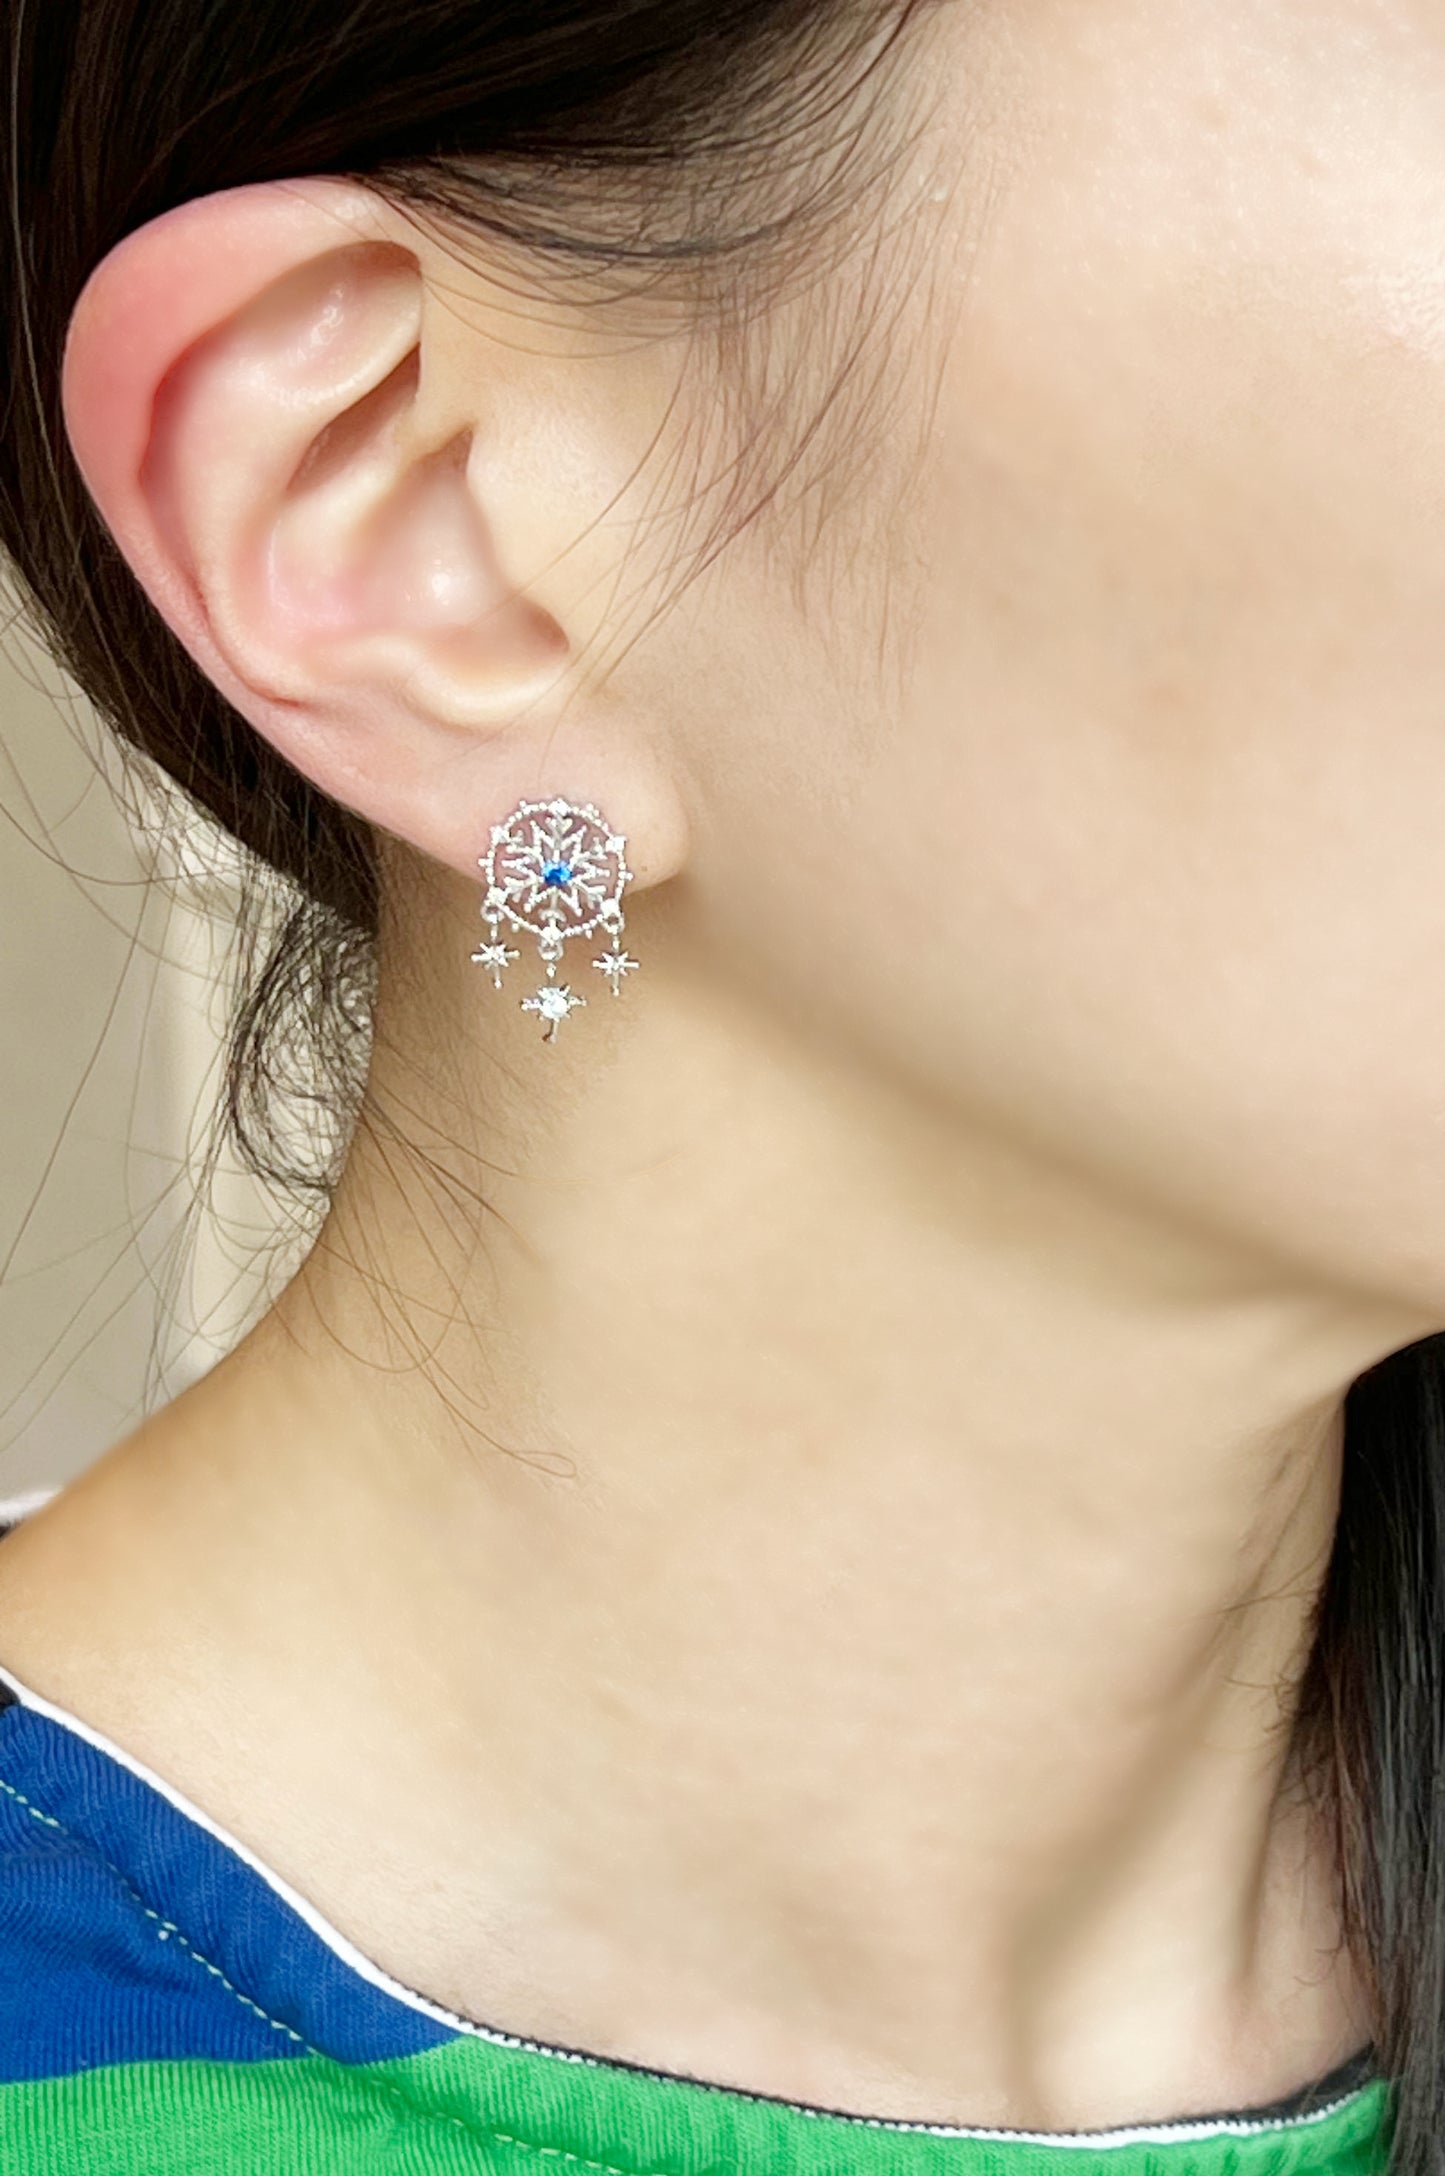 Dream Catcher blue cubic point Stud Earrings, Dreamcatcher Studs with snowflake Dangling Charms, Boho Earrings, Boho Jewelrey, Tribal Earrings